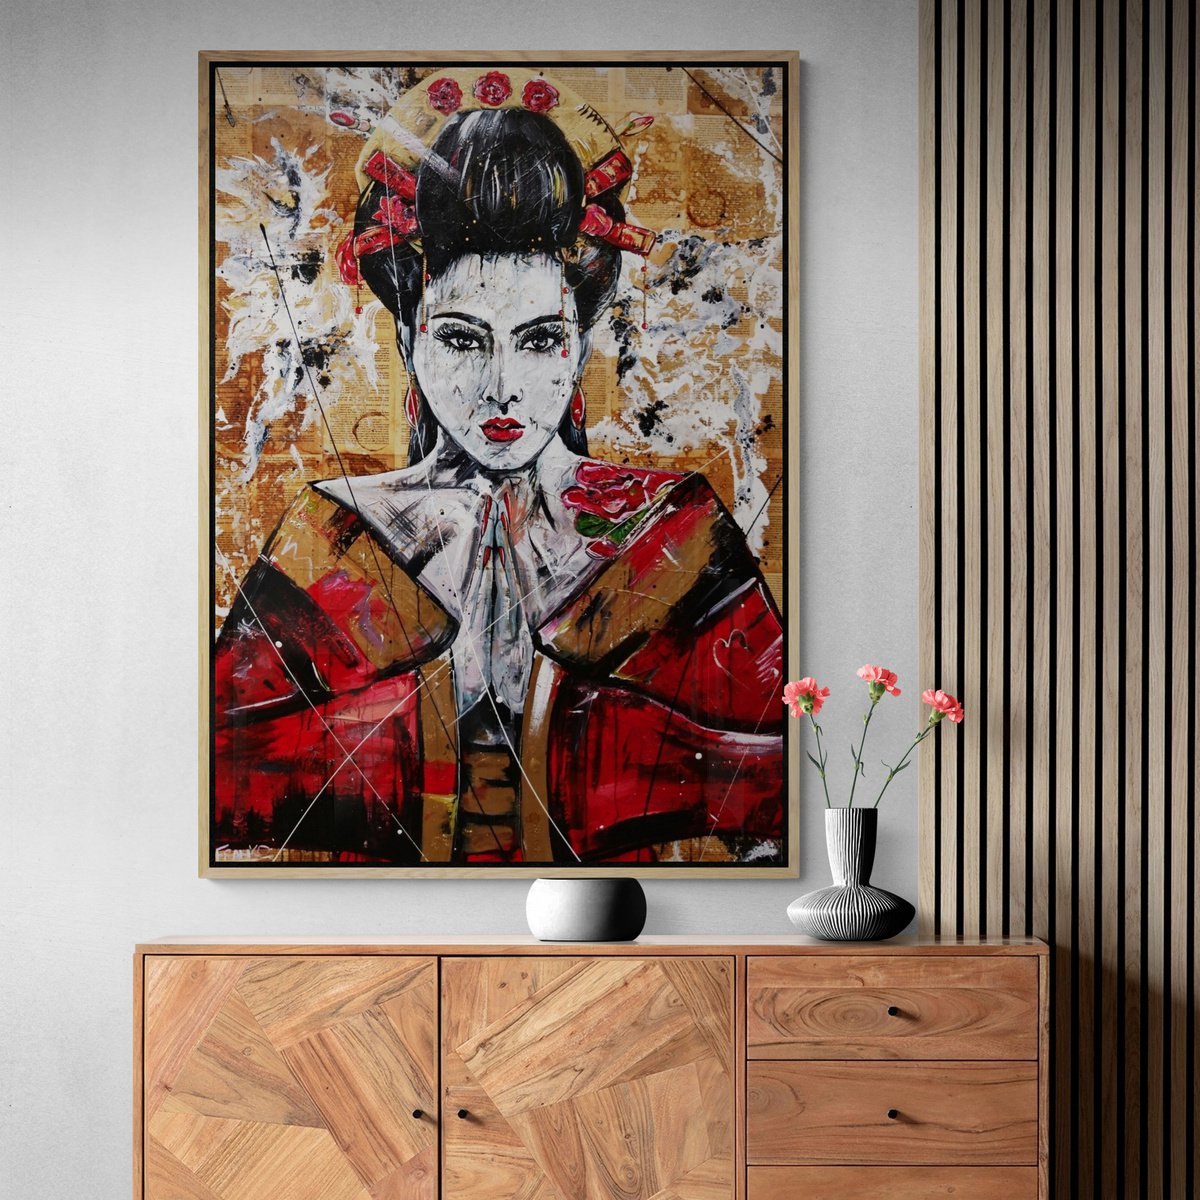 Cherry Ocho 140cm x 100cm Geisha Book Page Abstract Realism Art by Franko